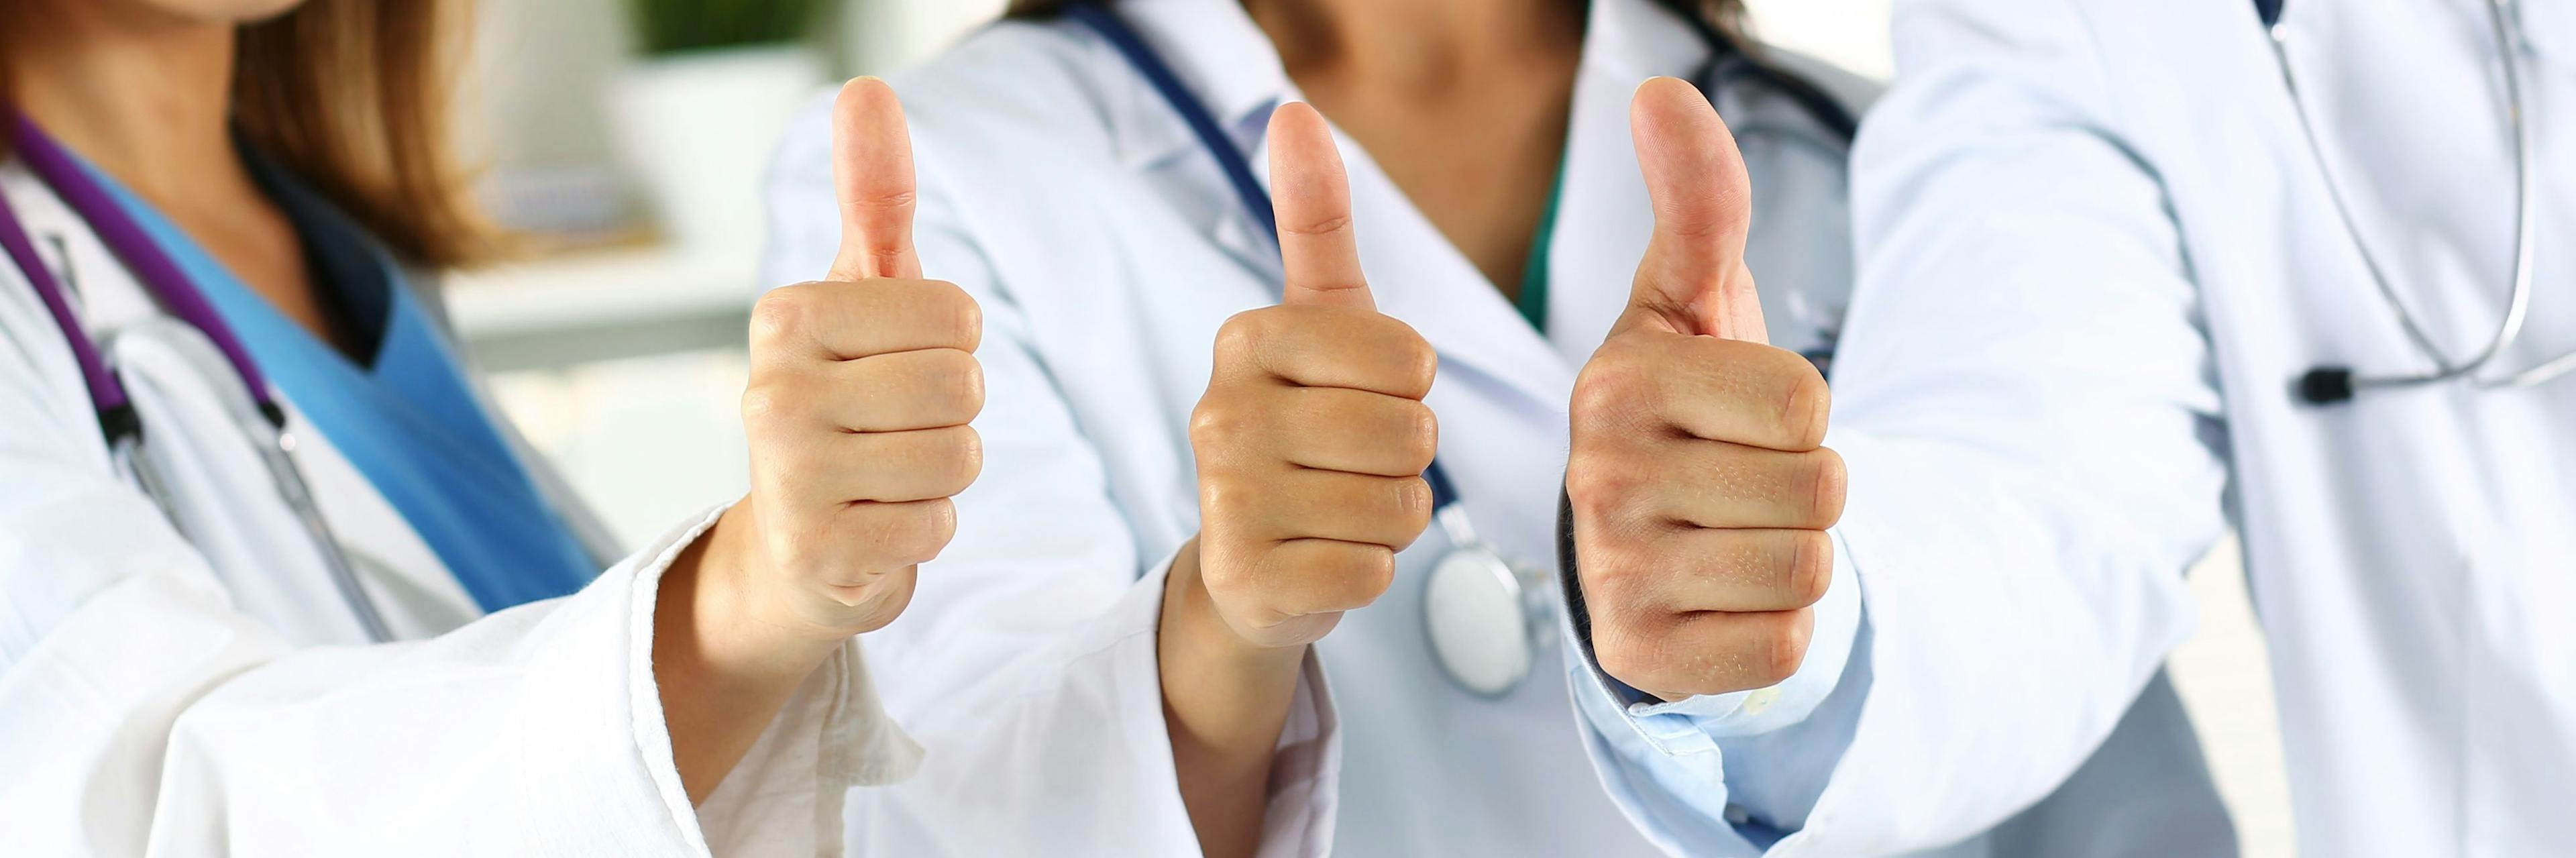 doctors thumbs up